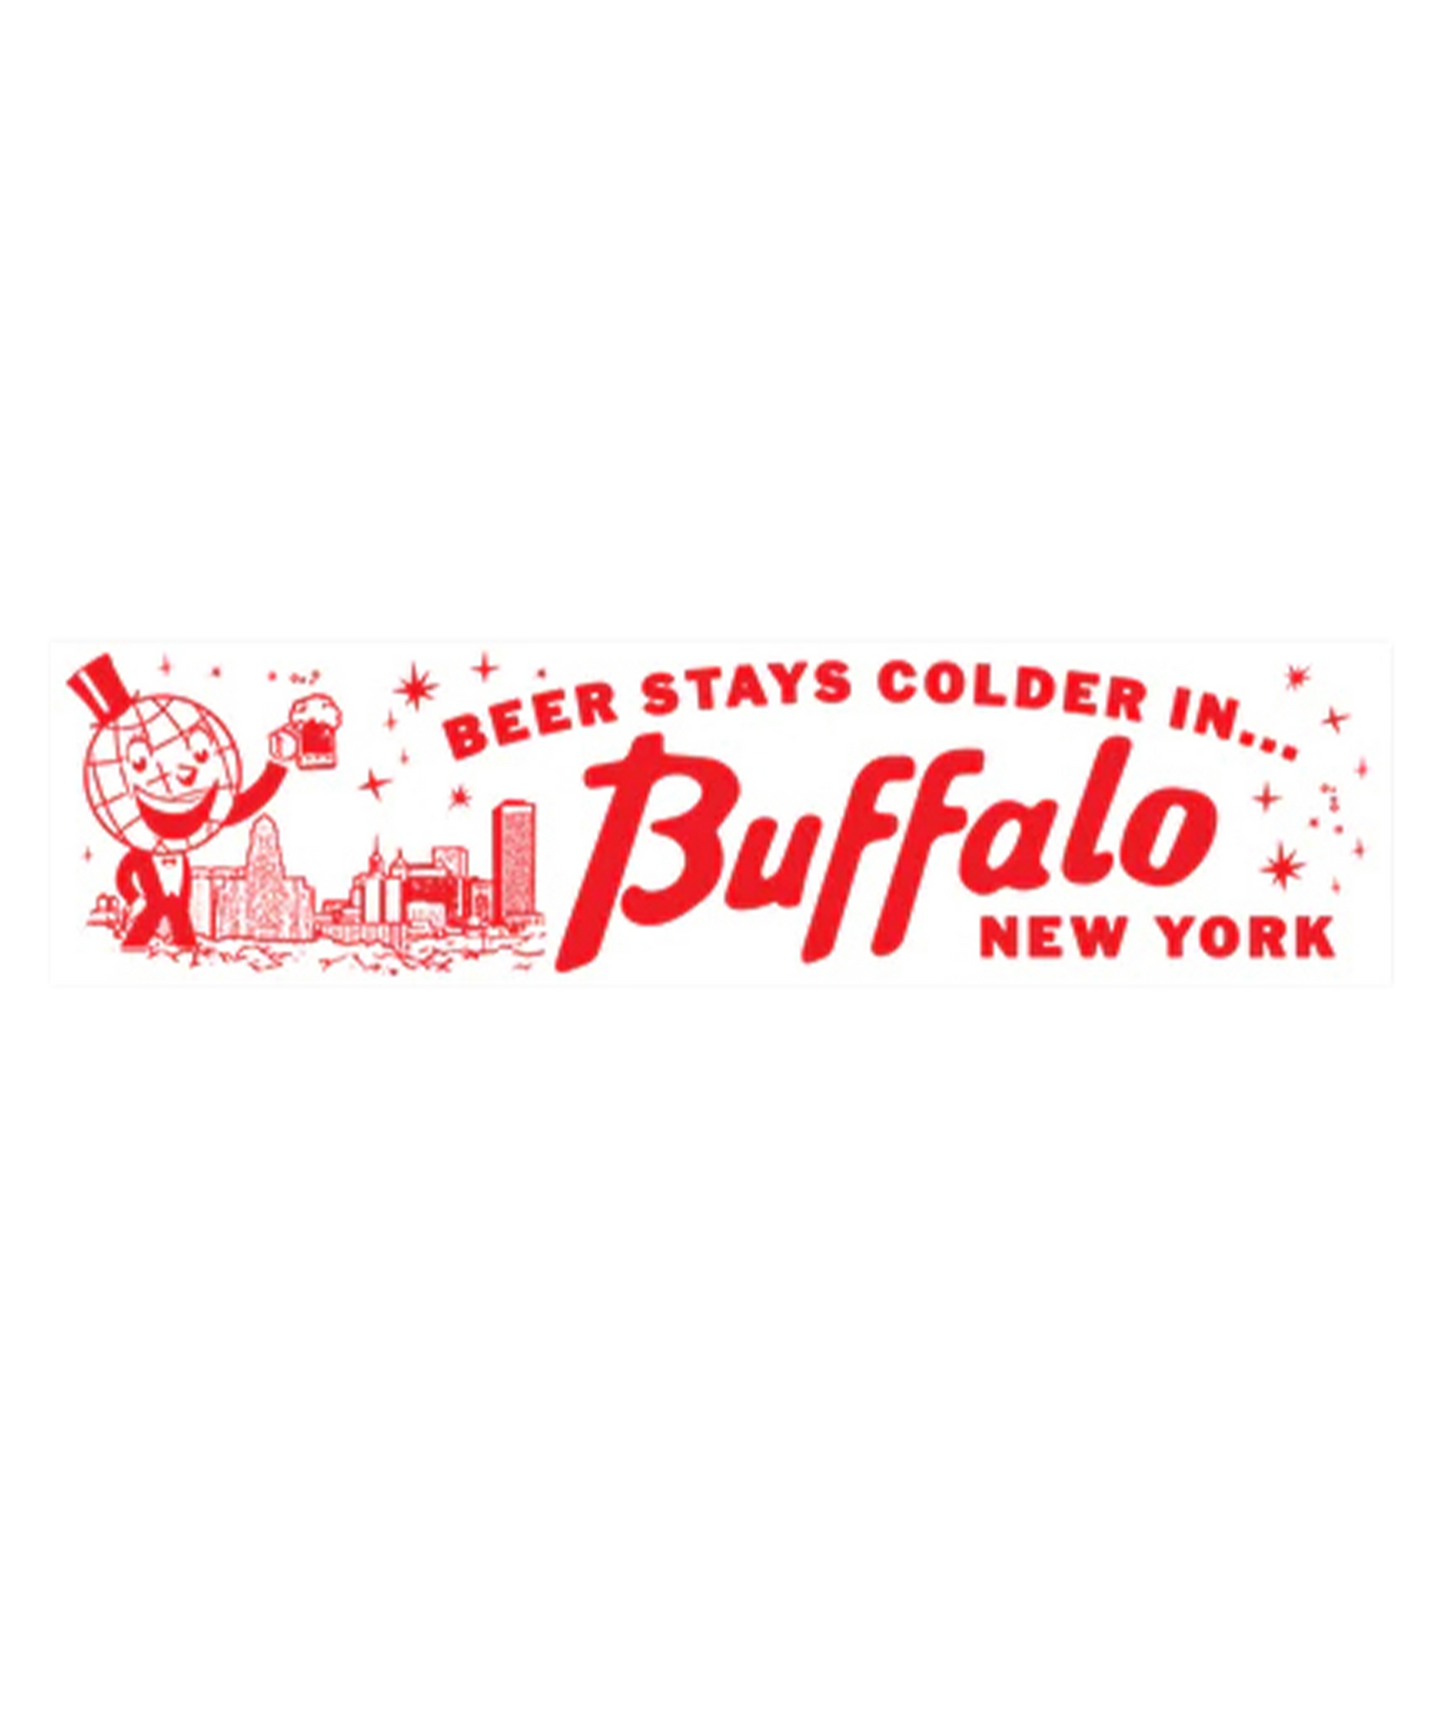 Beer Stays Colder in Buffalo Bumper Sticker